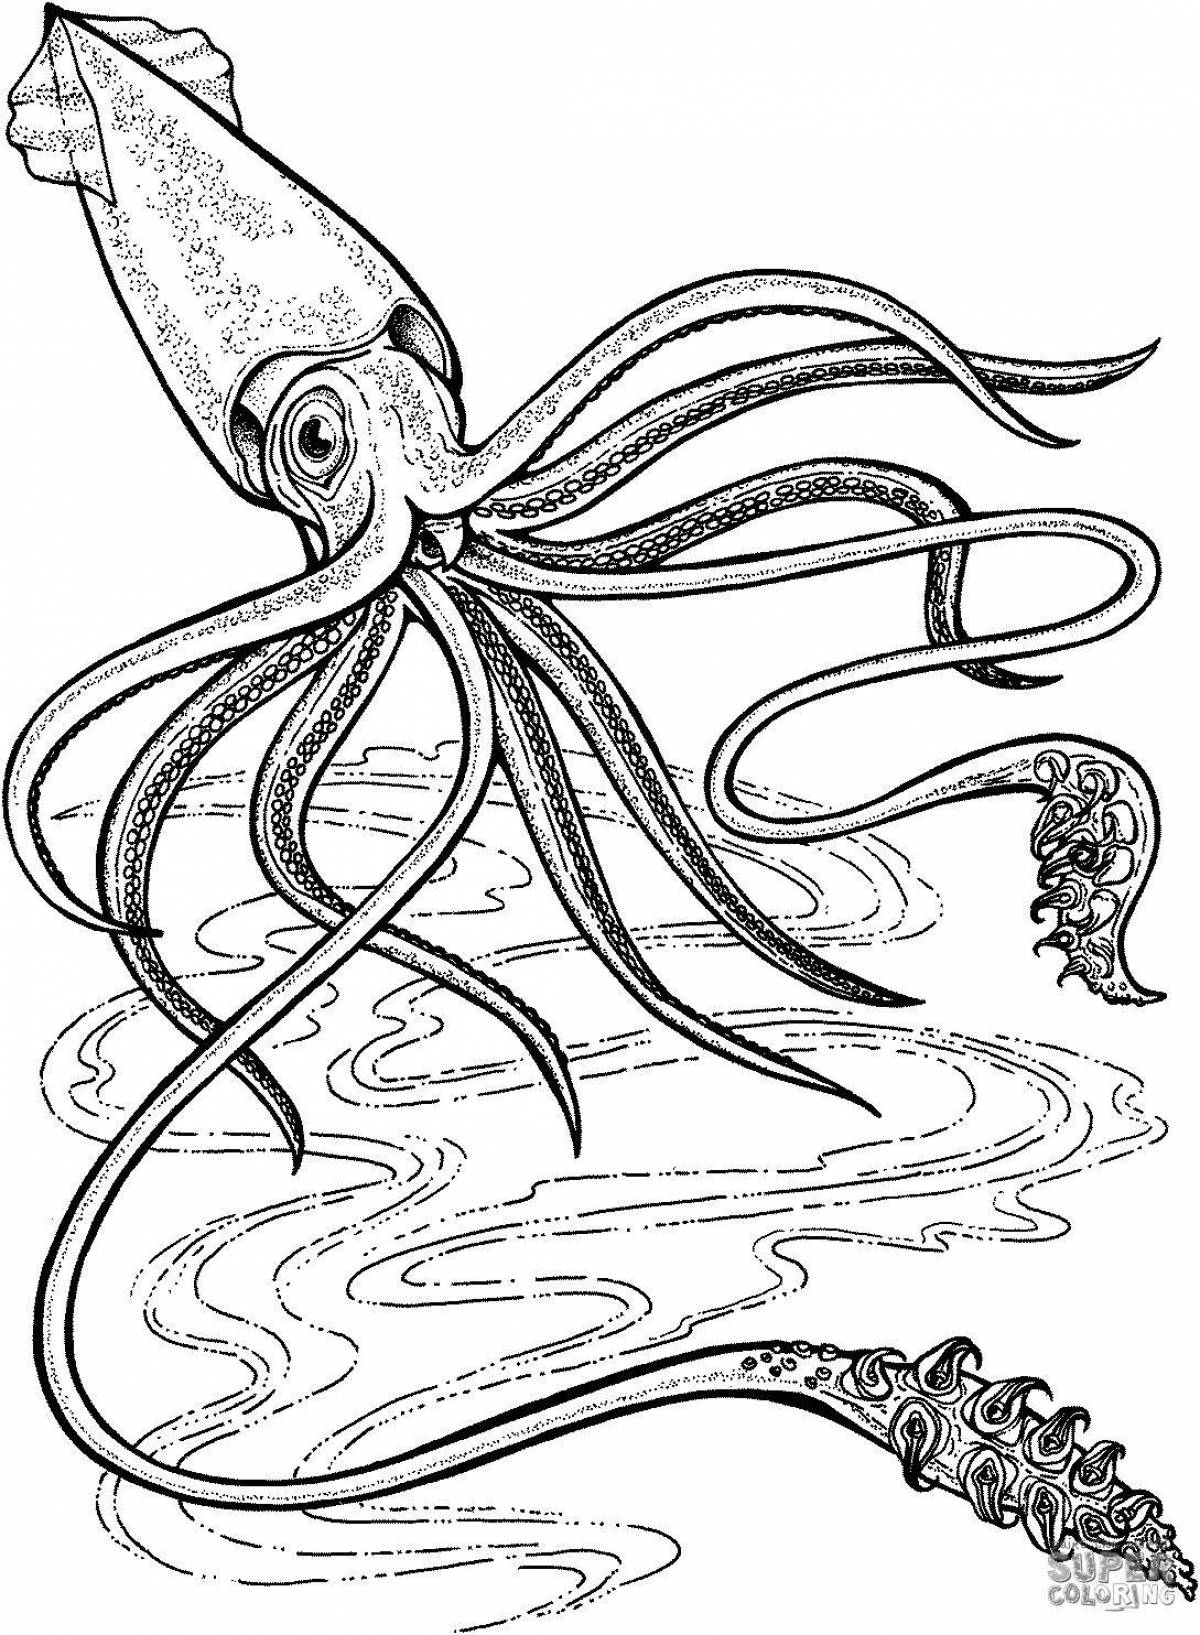 Fabulous squid coloring book